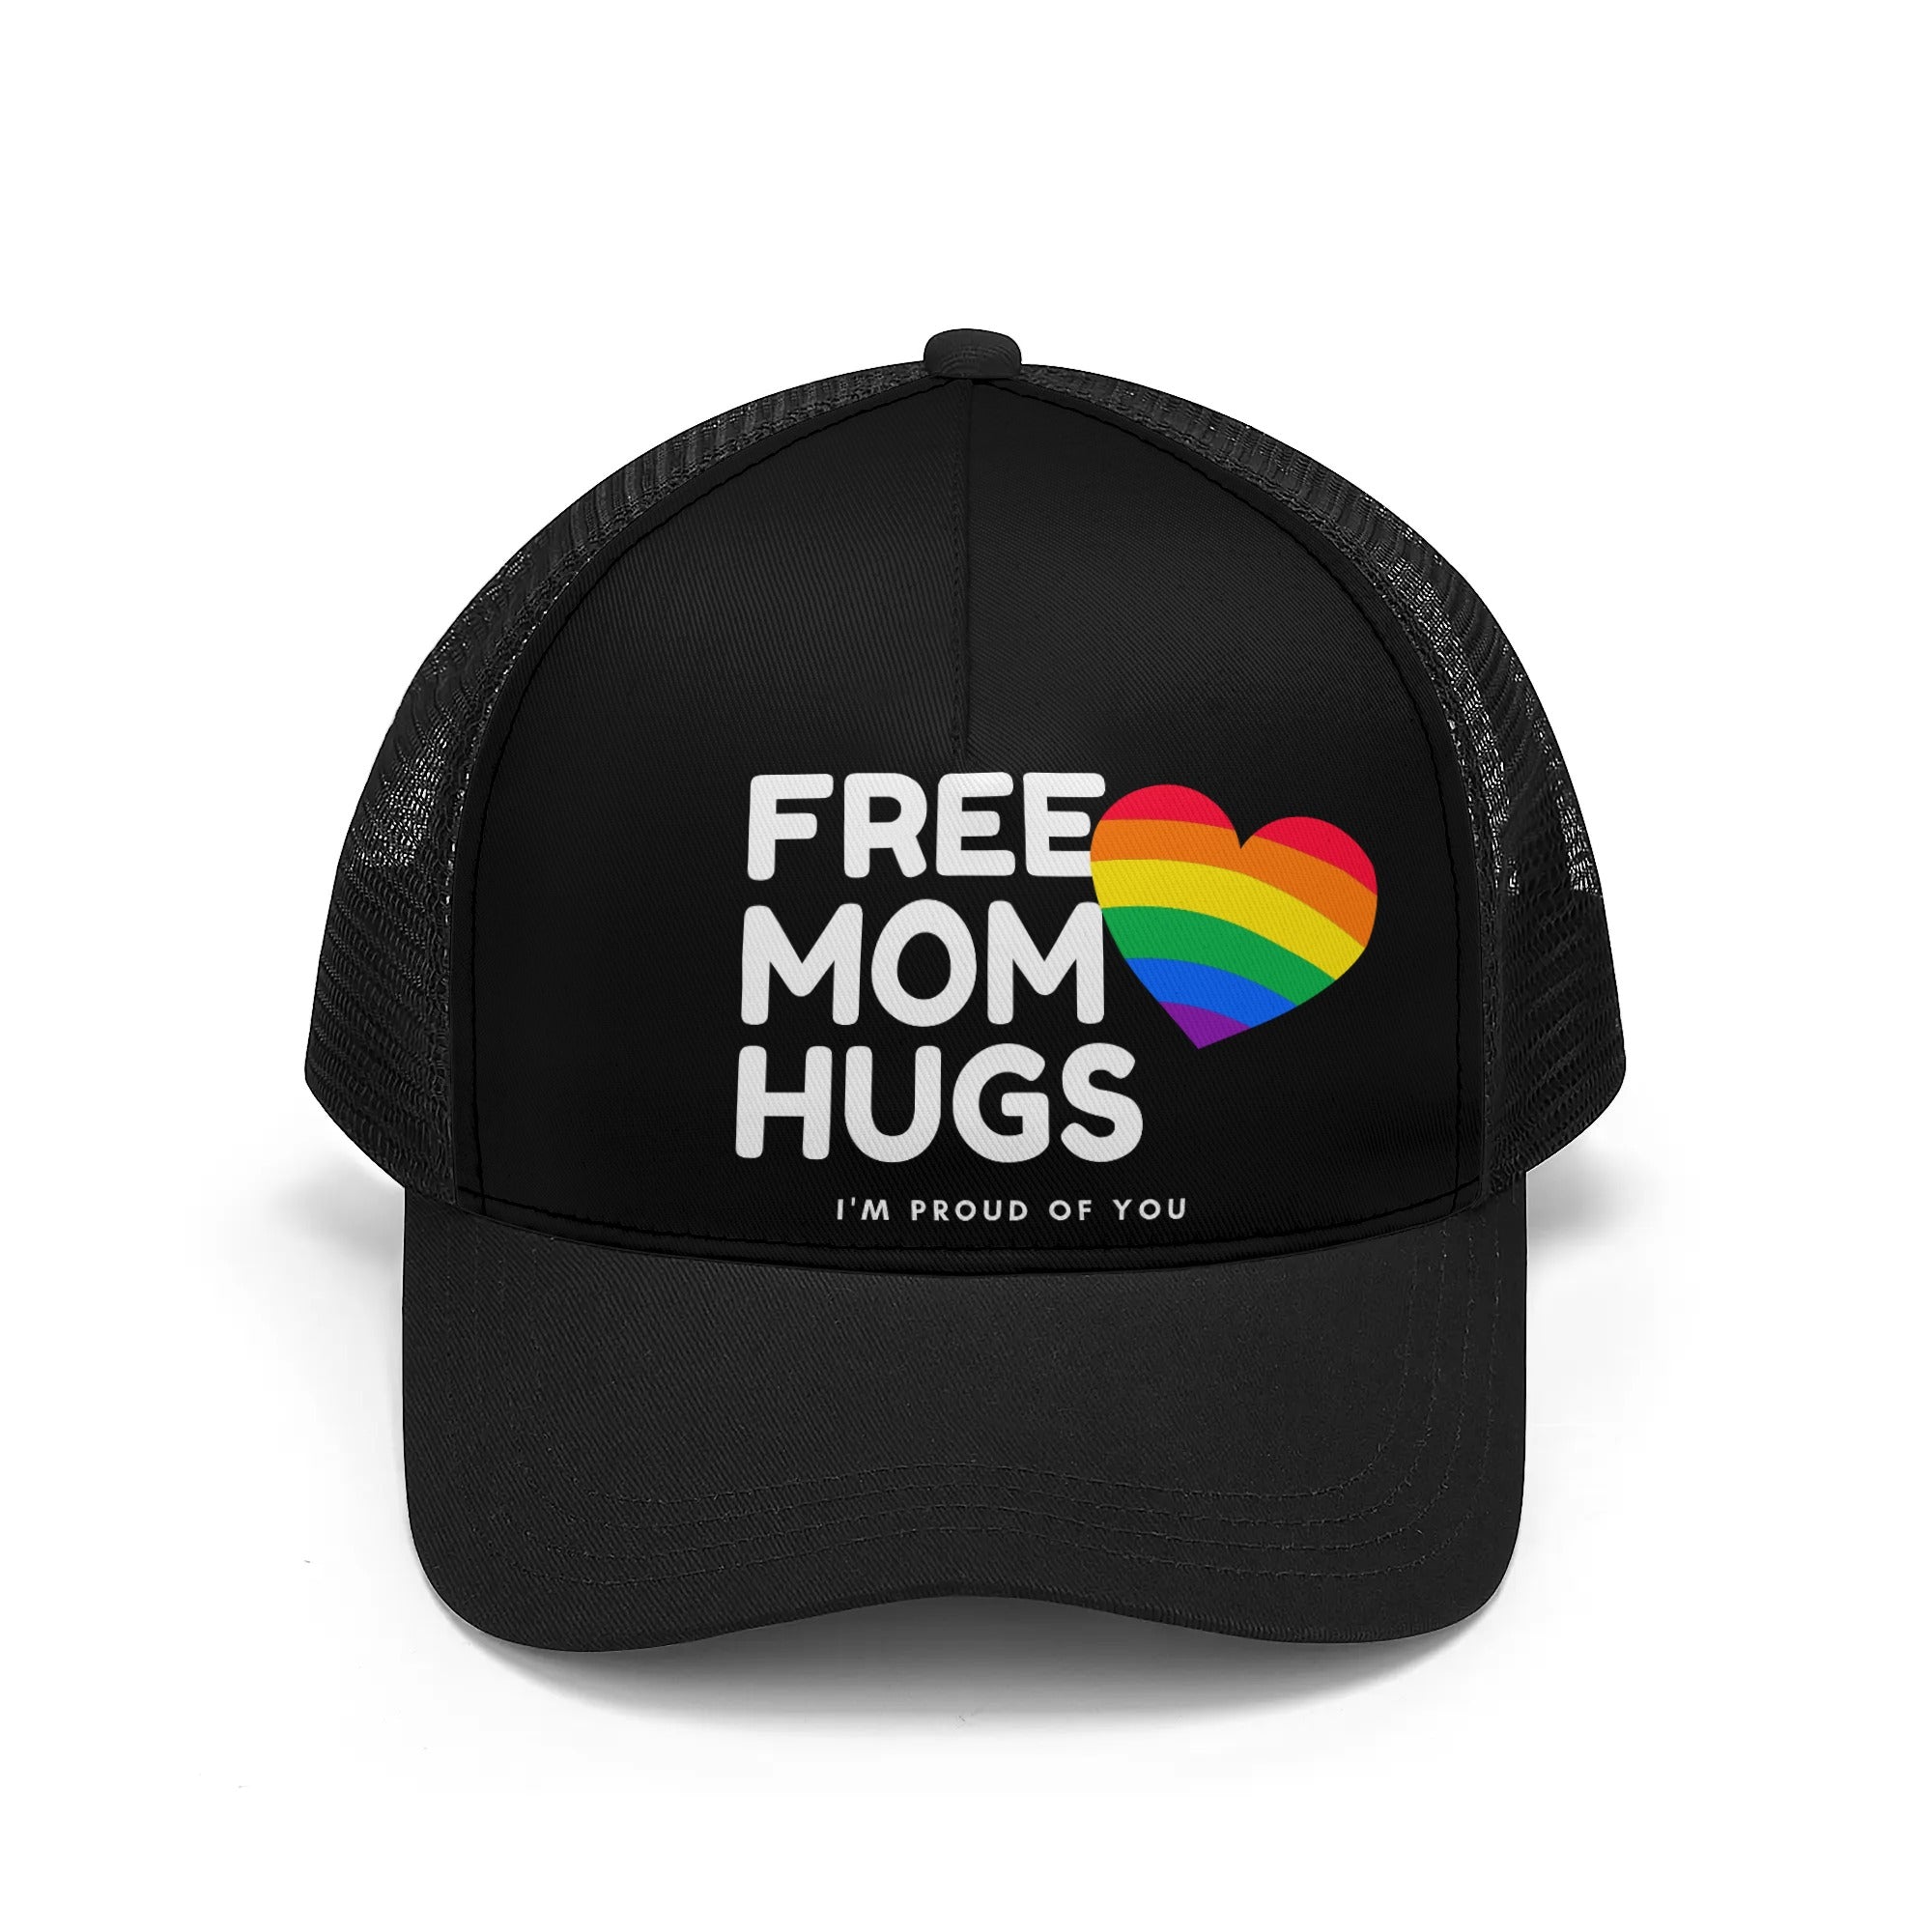 Free Mom Hugs Mesh Trucker Hat